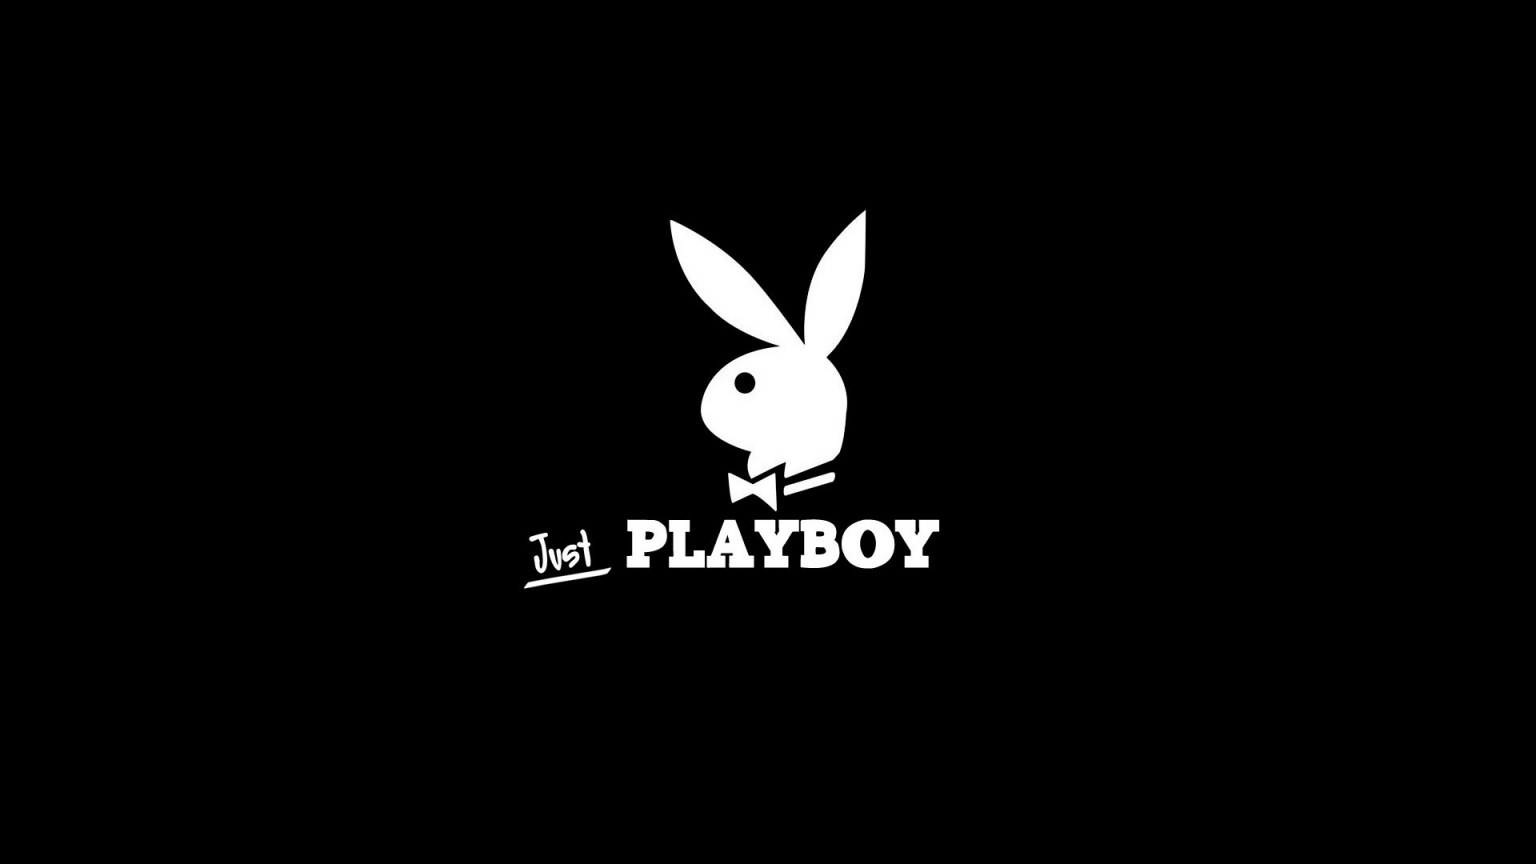 Playboy Logo for 1536 x 864 HDTV resolution